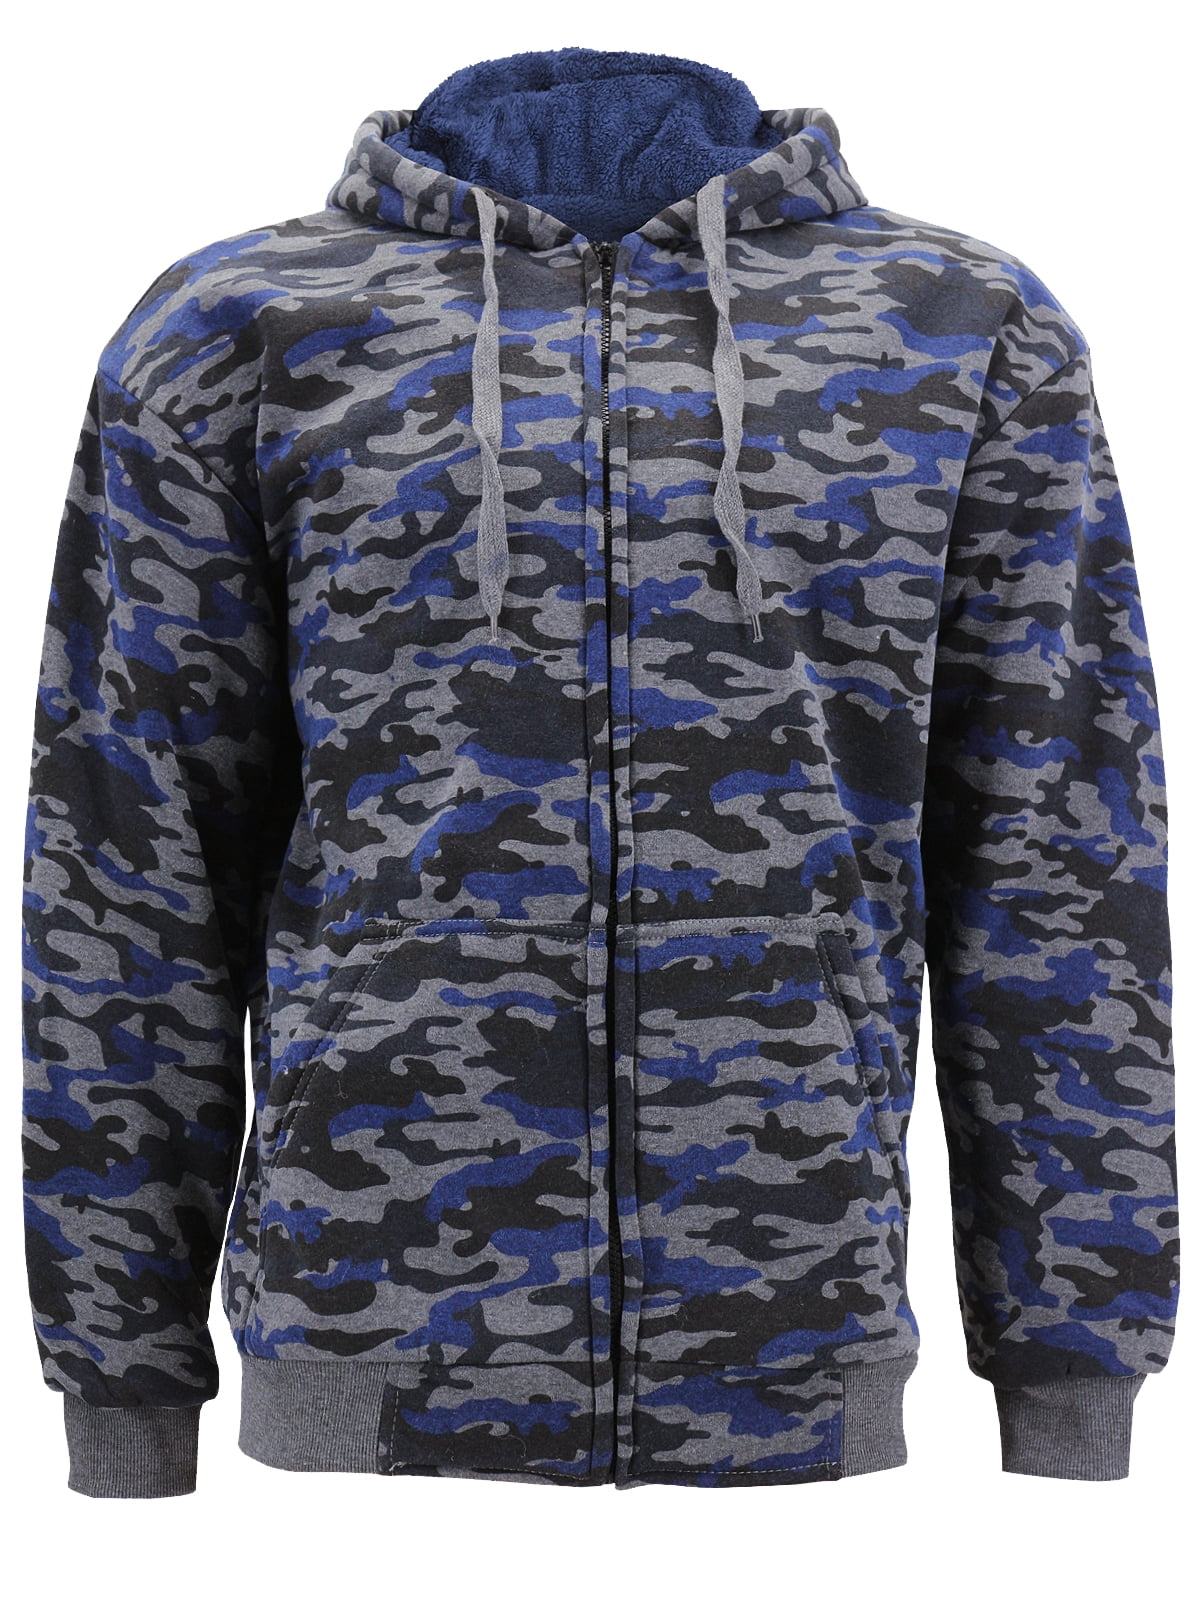 Men's Premium Athletic Soft Sherpa Lined Fleece Zip Up Hoodie Sweater Jacket (4026C - Blue, XL)